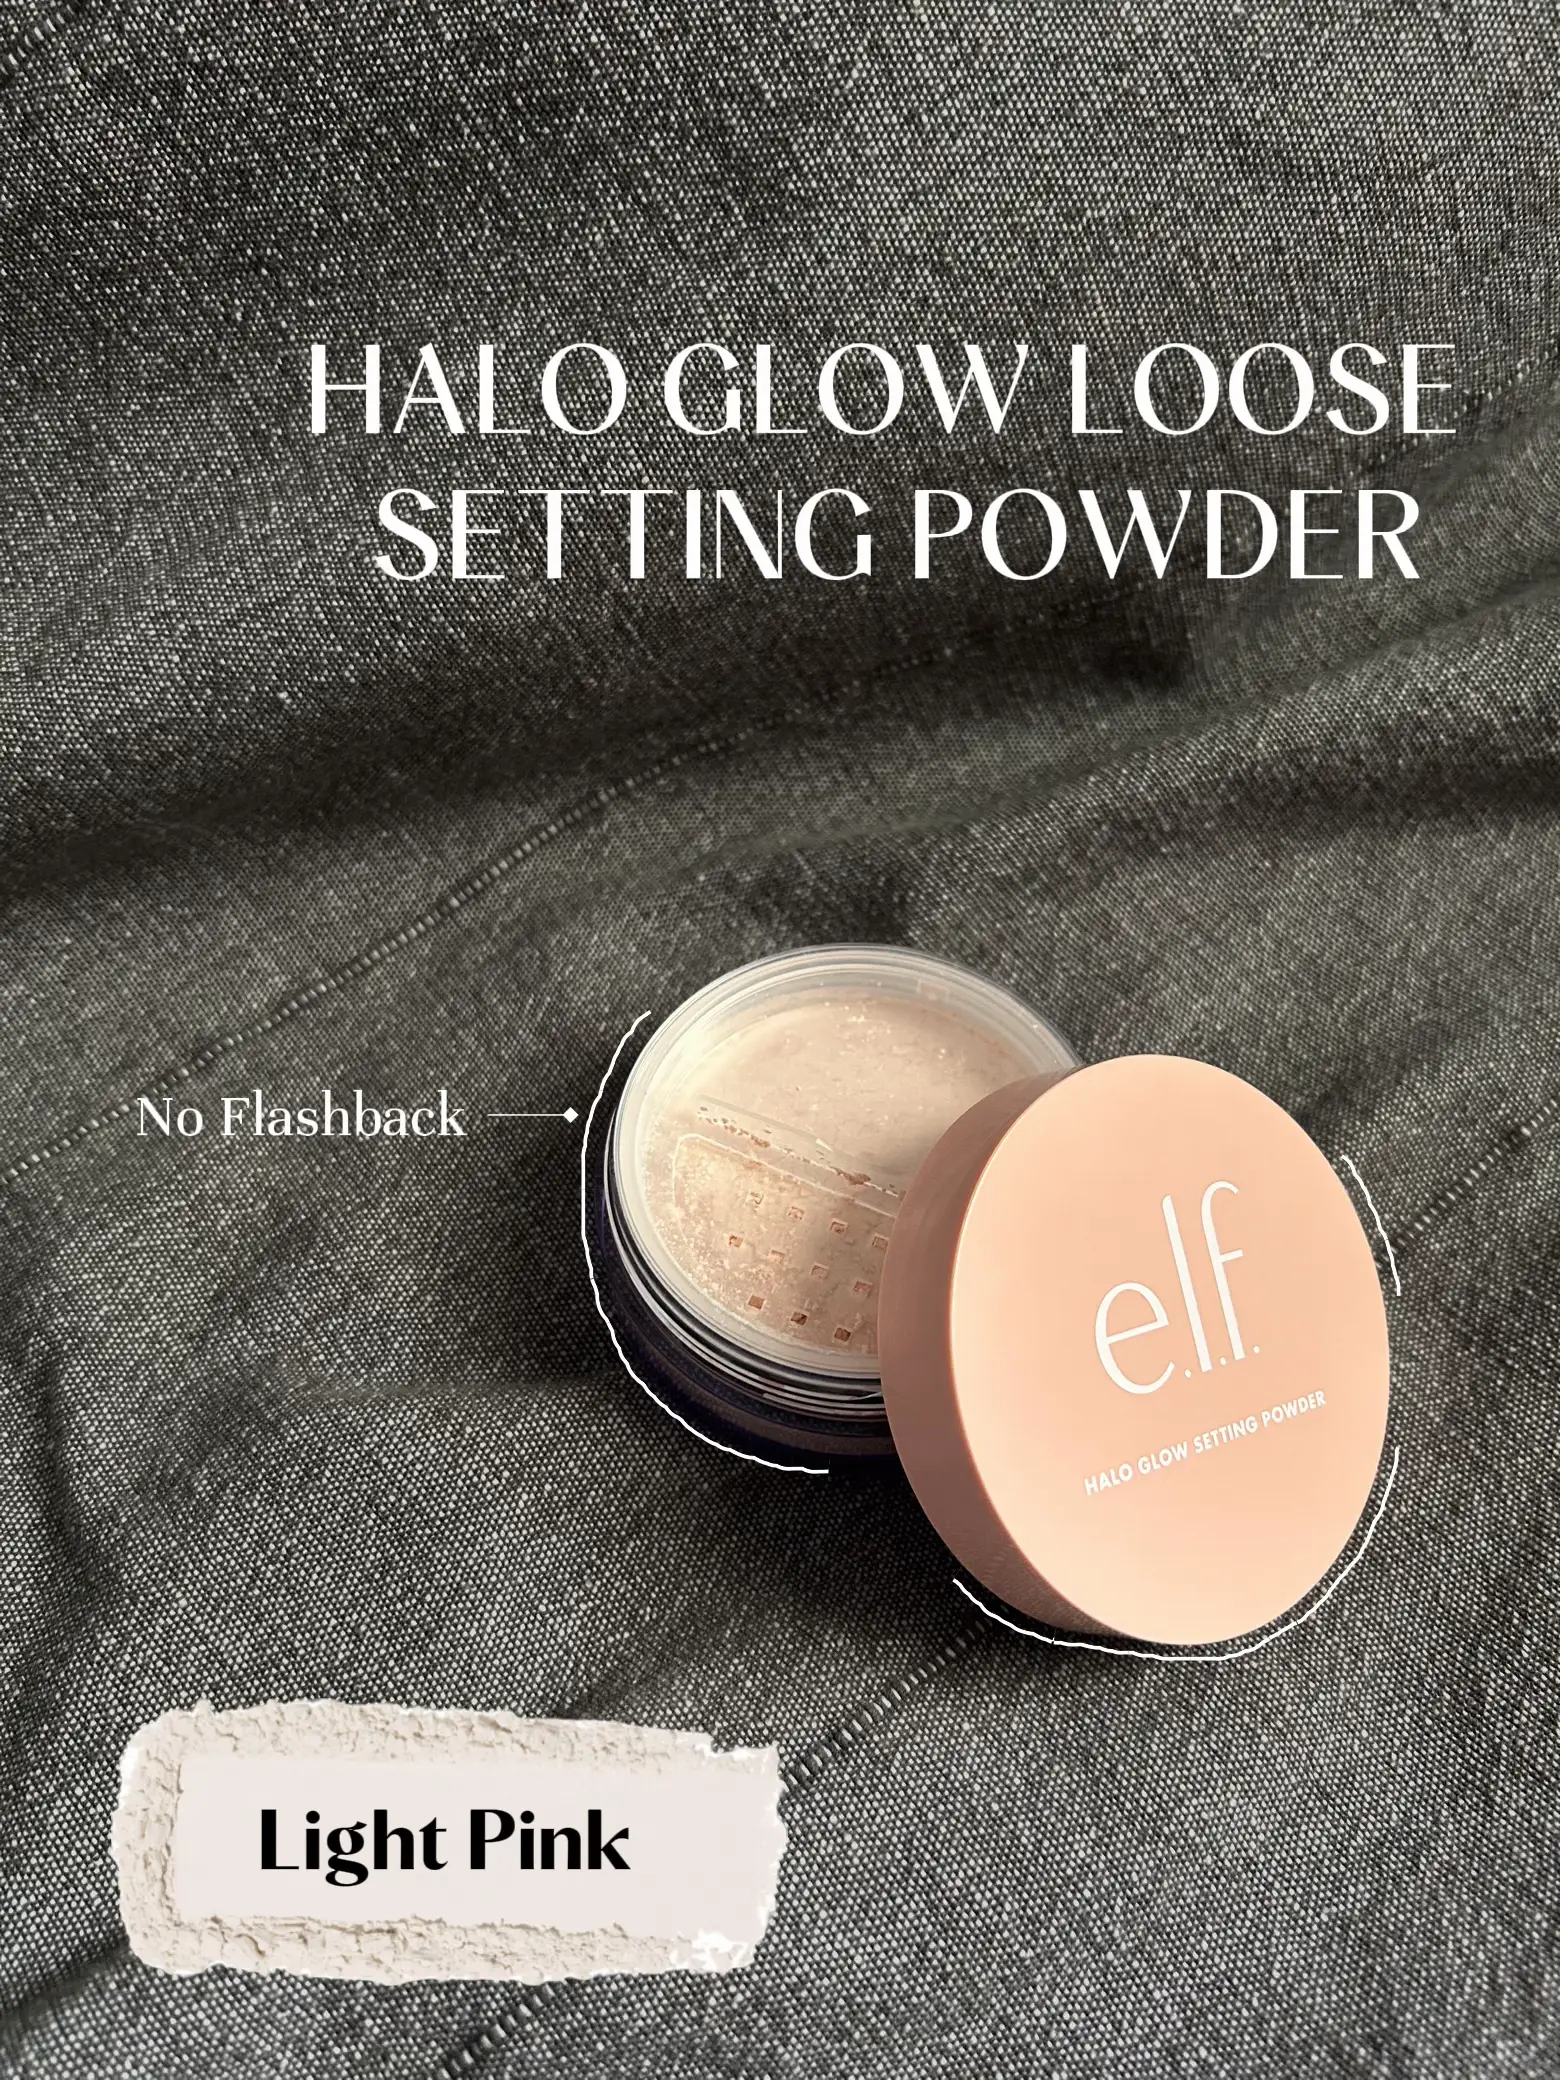 Halo Glow Loose Setting Powder